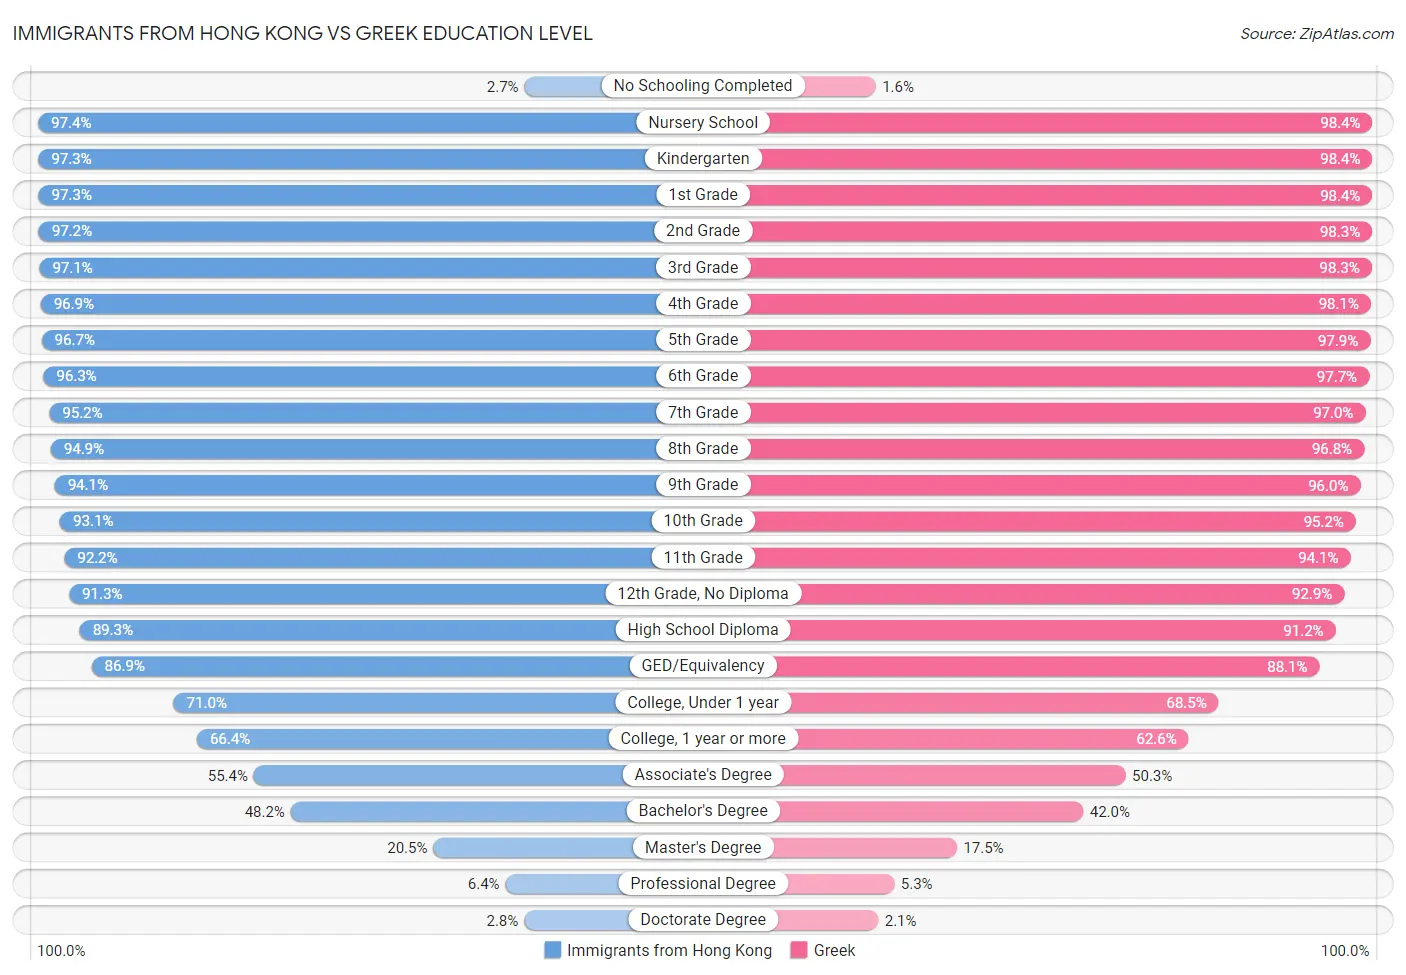 Immigrants from Hong Kong vs Greek Education Level